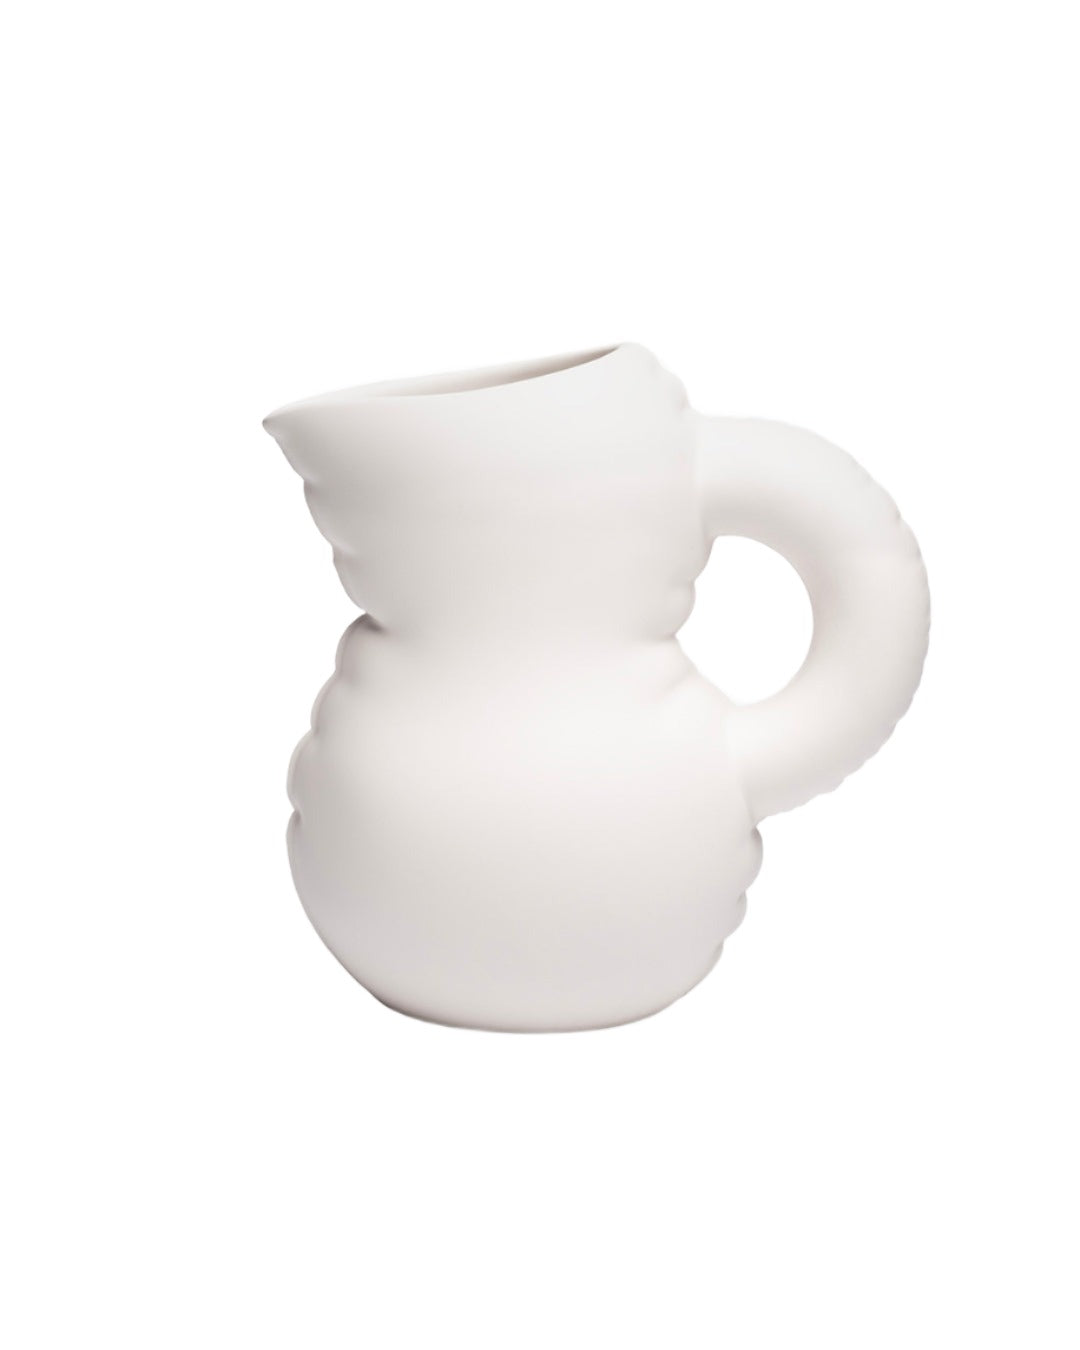 Home-Studyo - Handamde ceramic jug